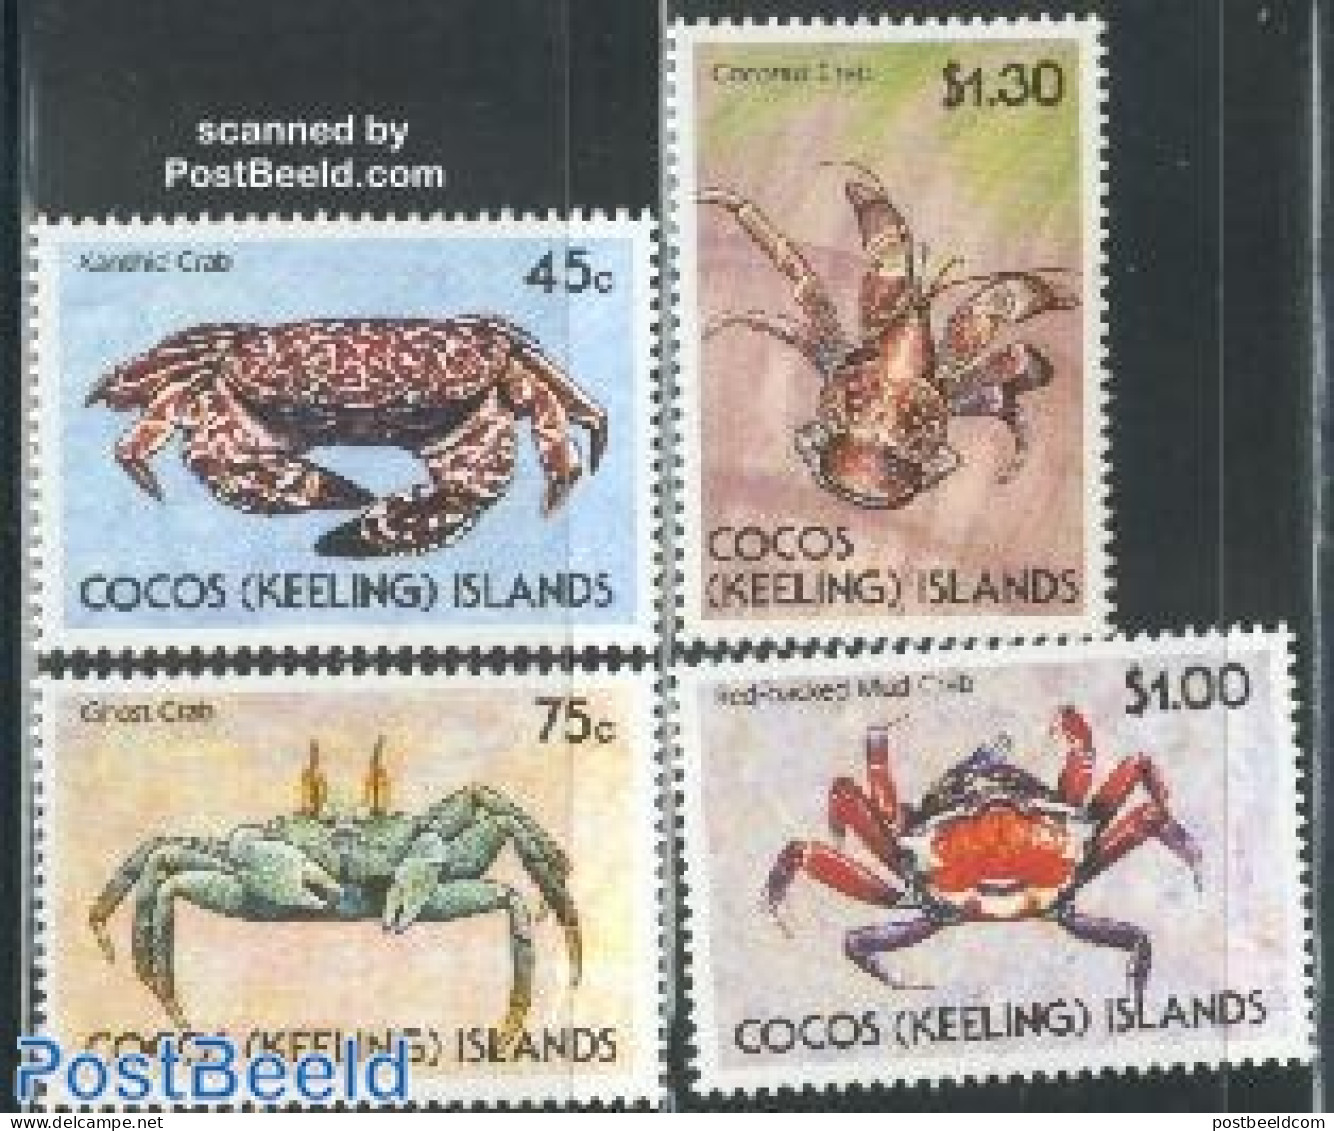 Cocos Islands 1990 Crabs 4v, Mint NH, Nature - Shells & Crustaceans - Crabs And Lobsters - Marine Life